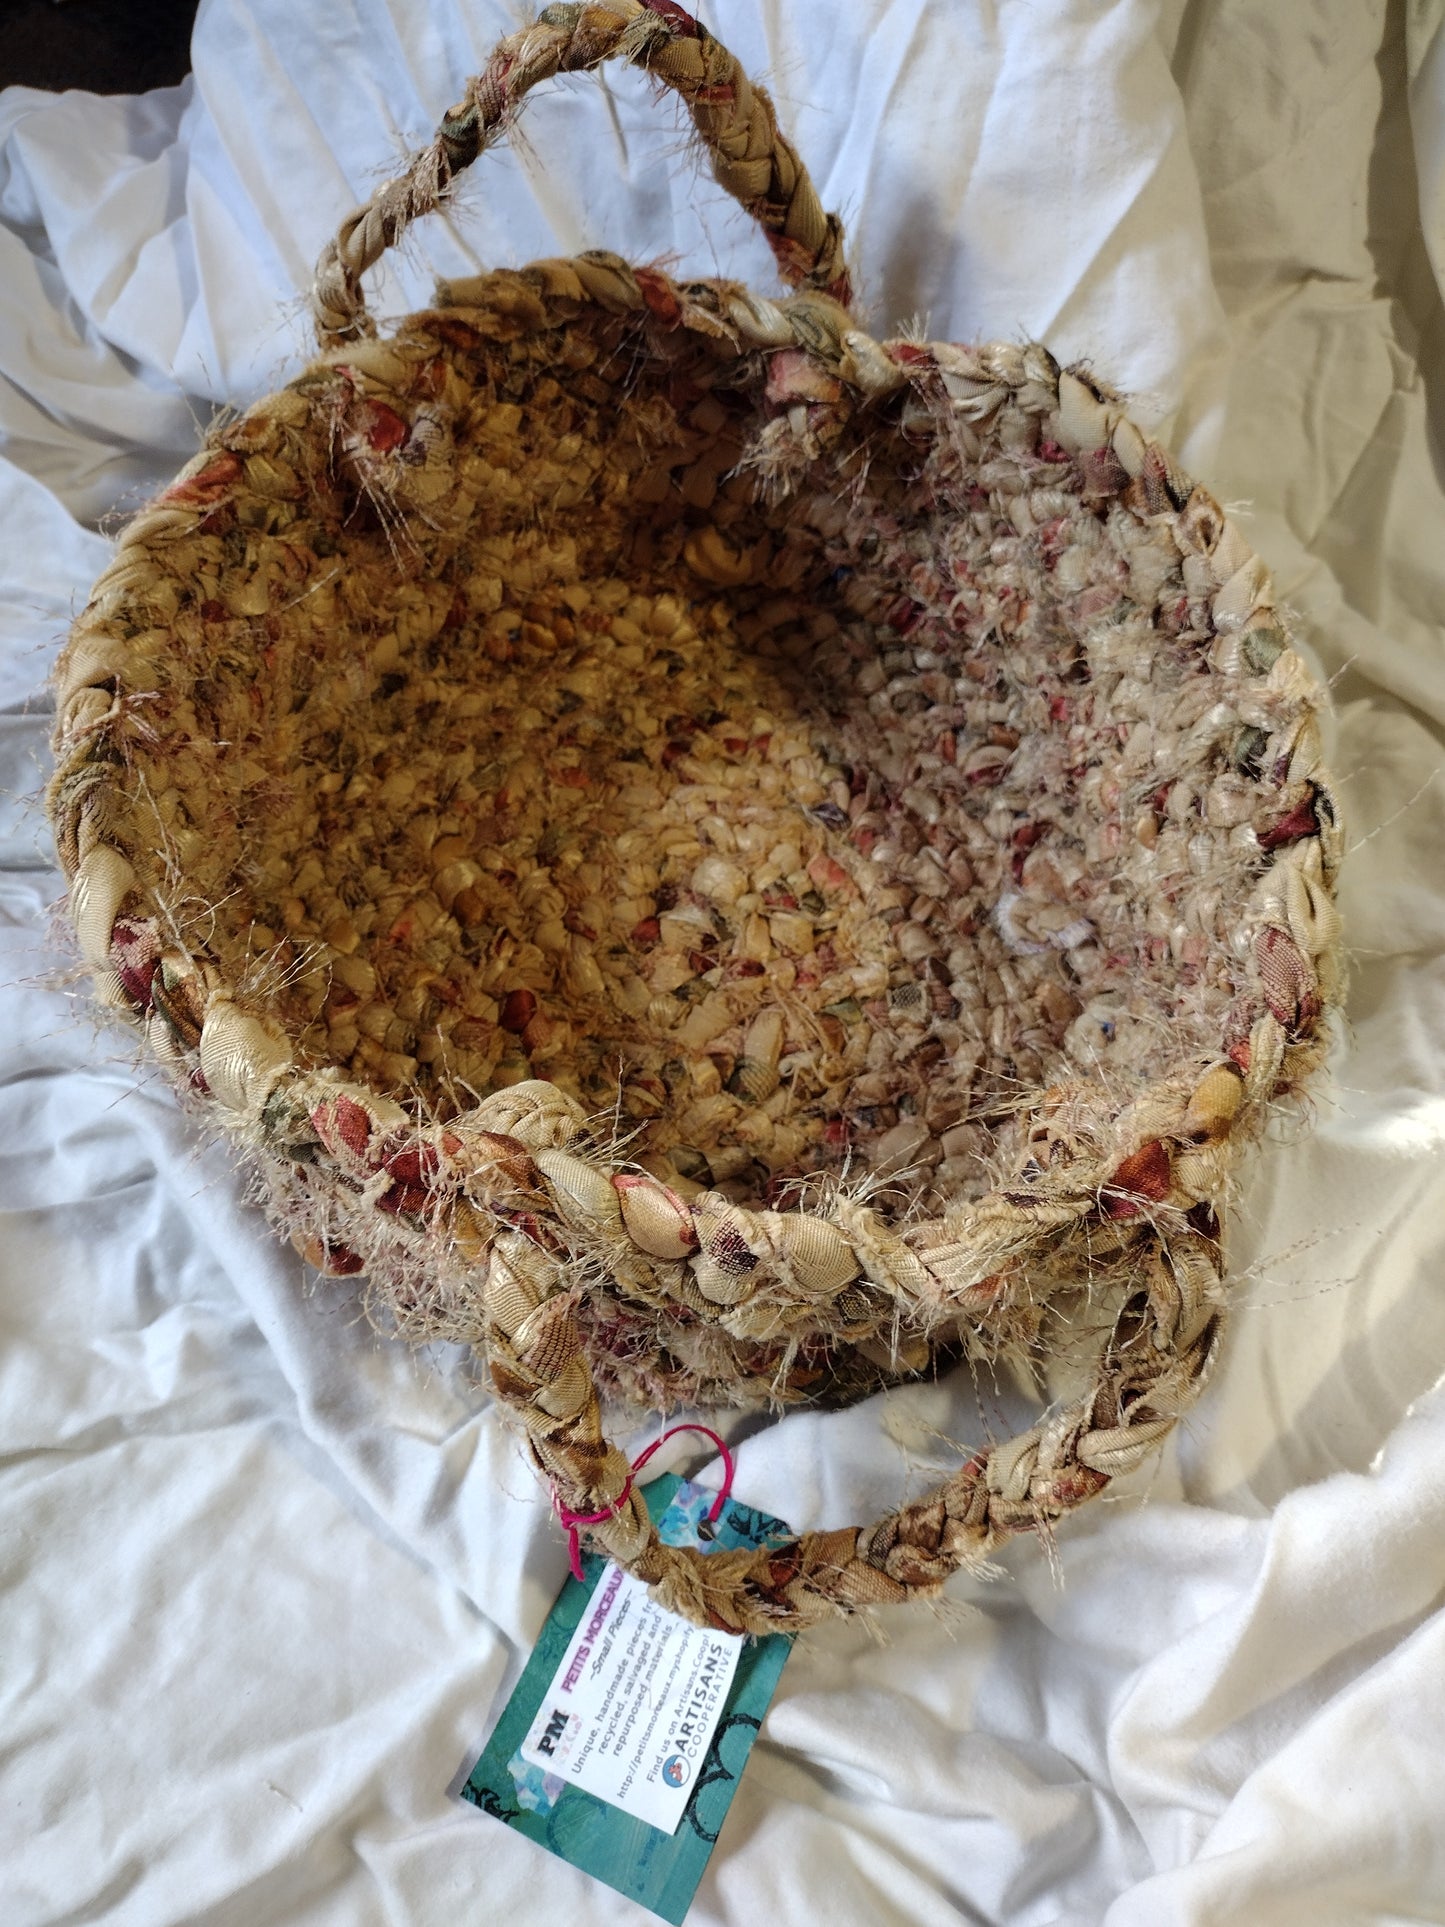 12 inch diameter hand braided basket with handles